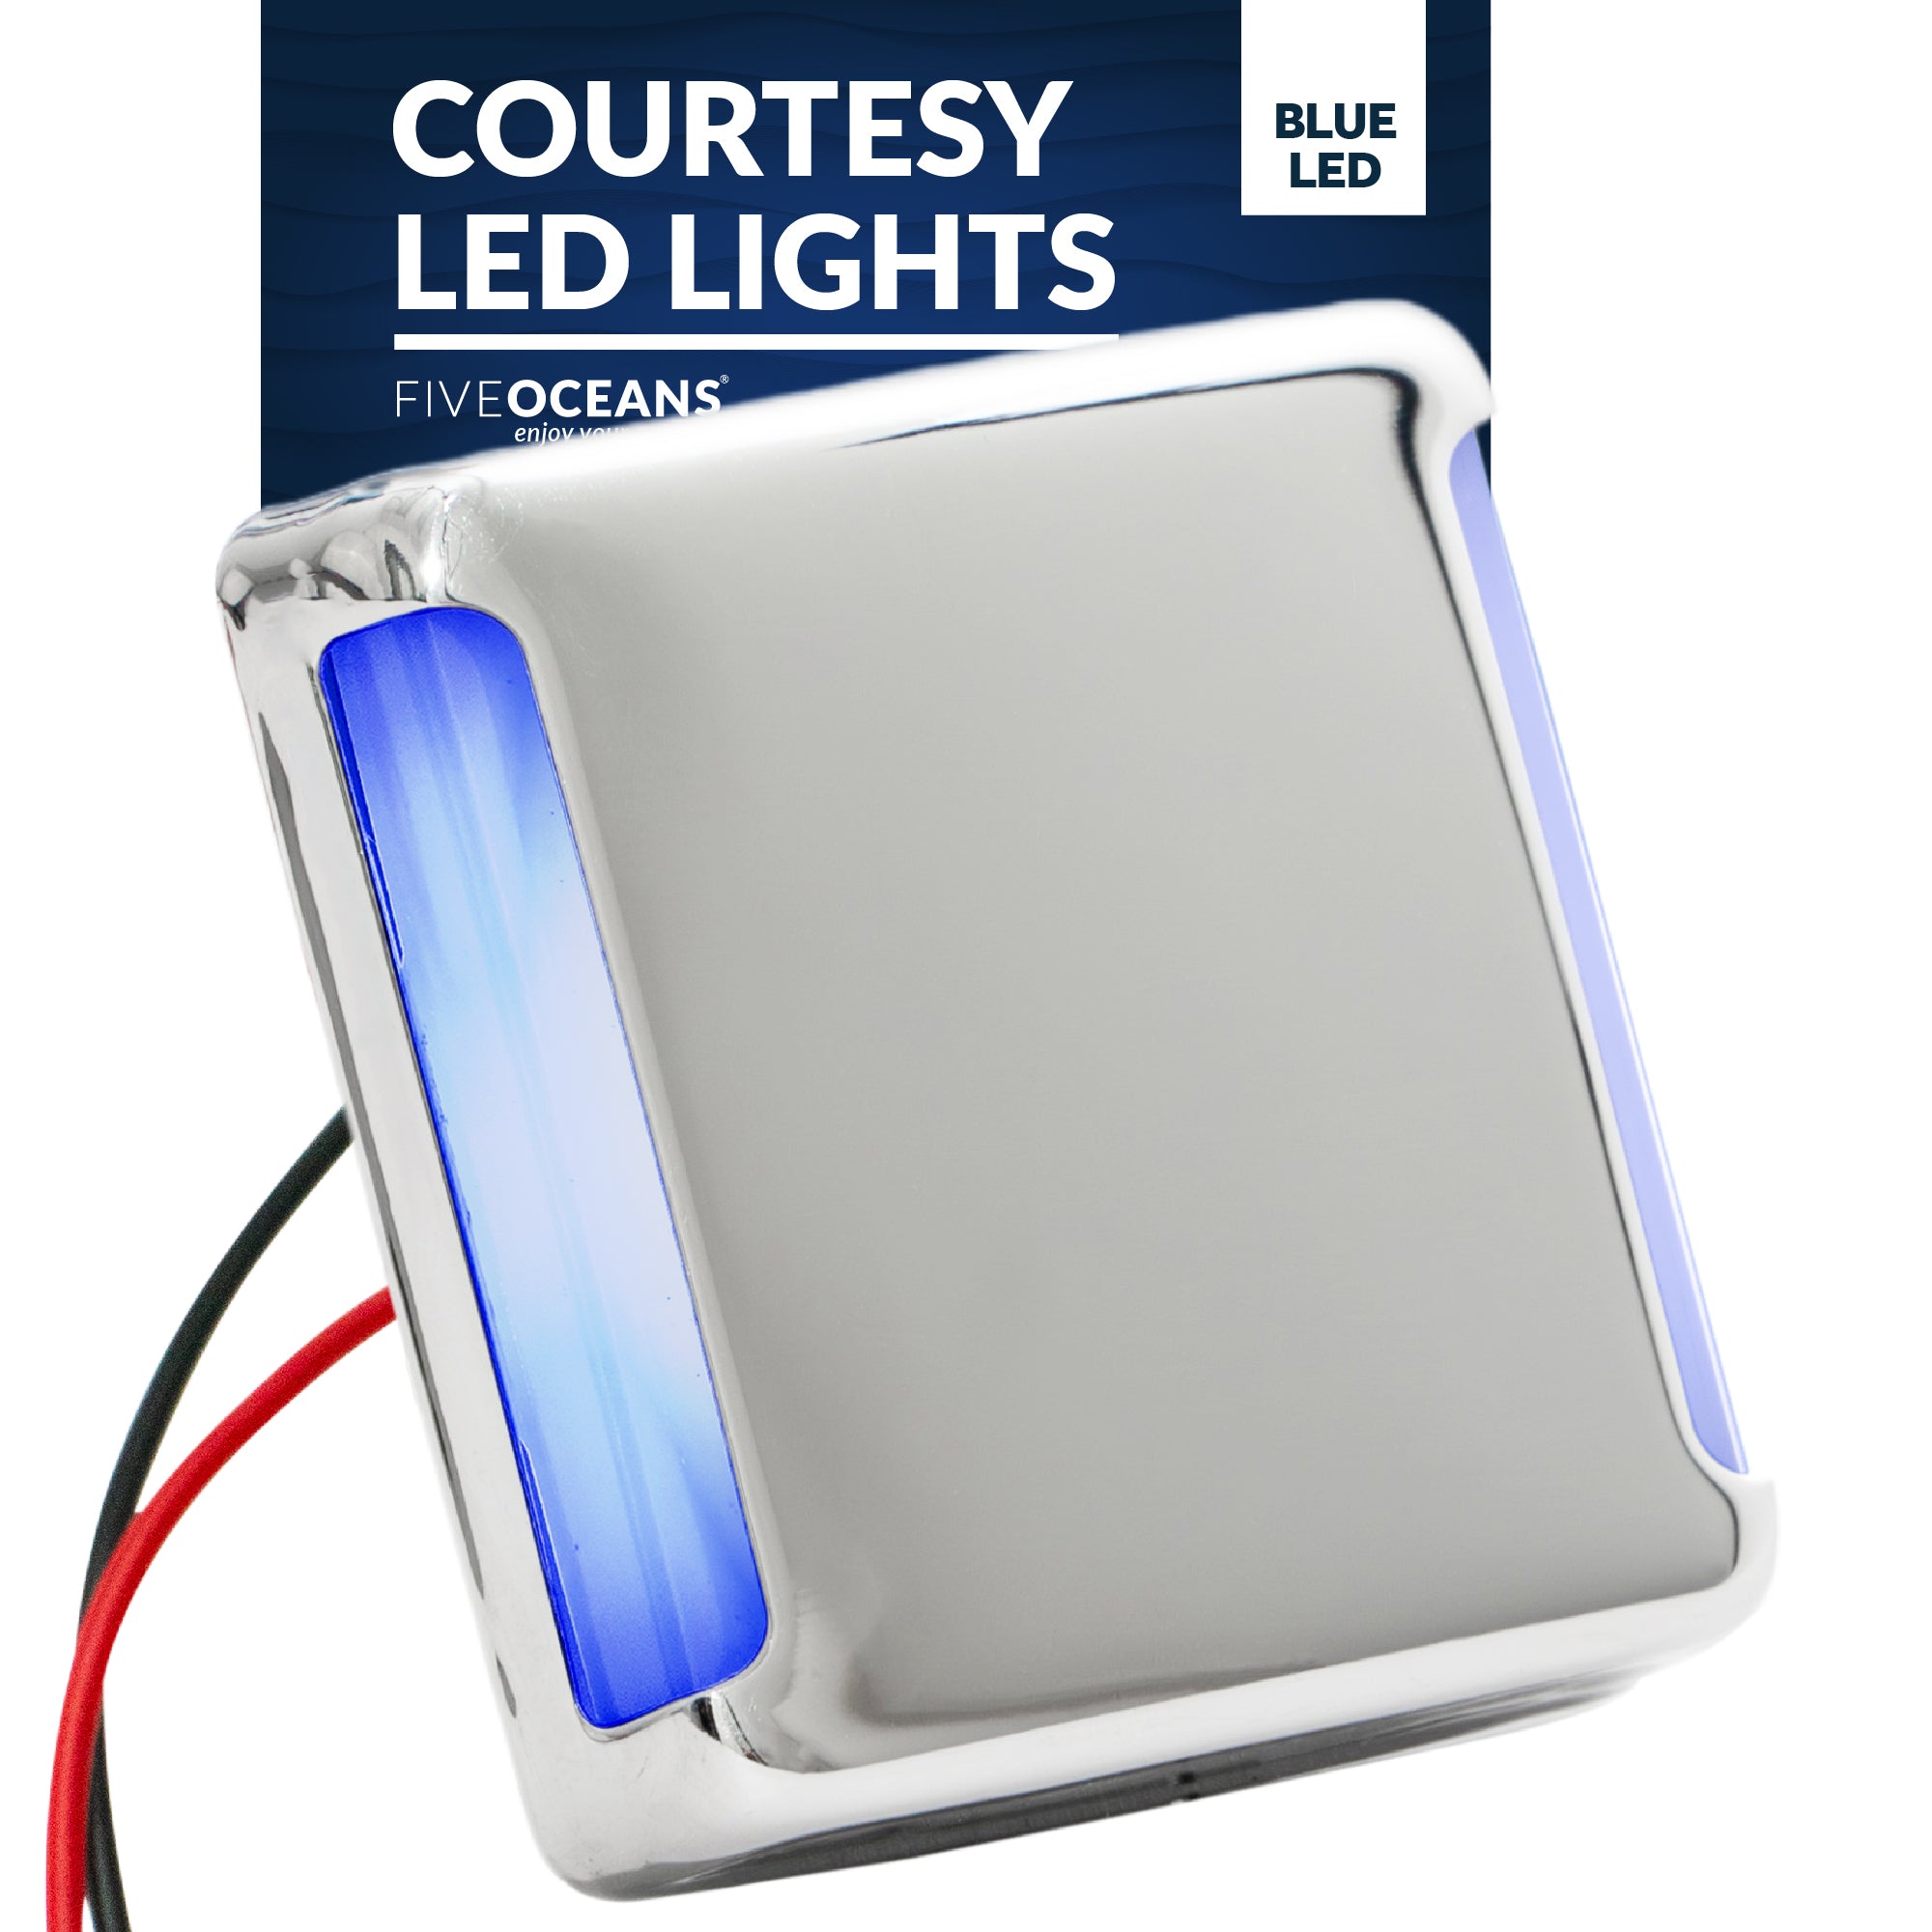 LED Courtesy Companion Way Light, Square, Blue - FO4456